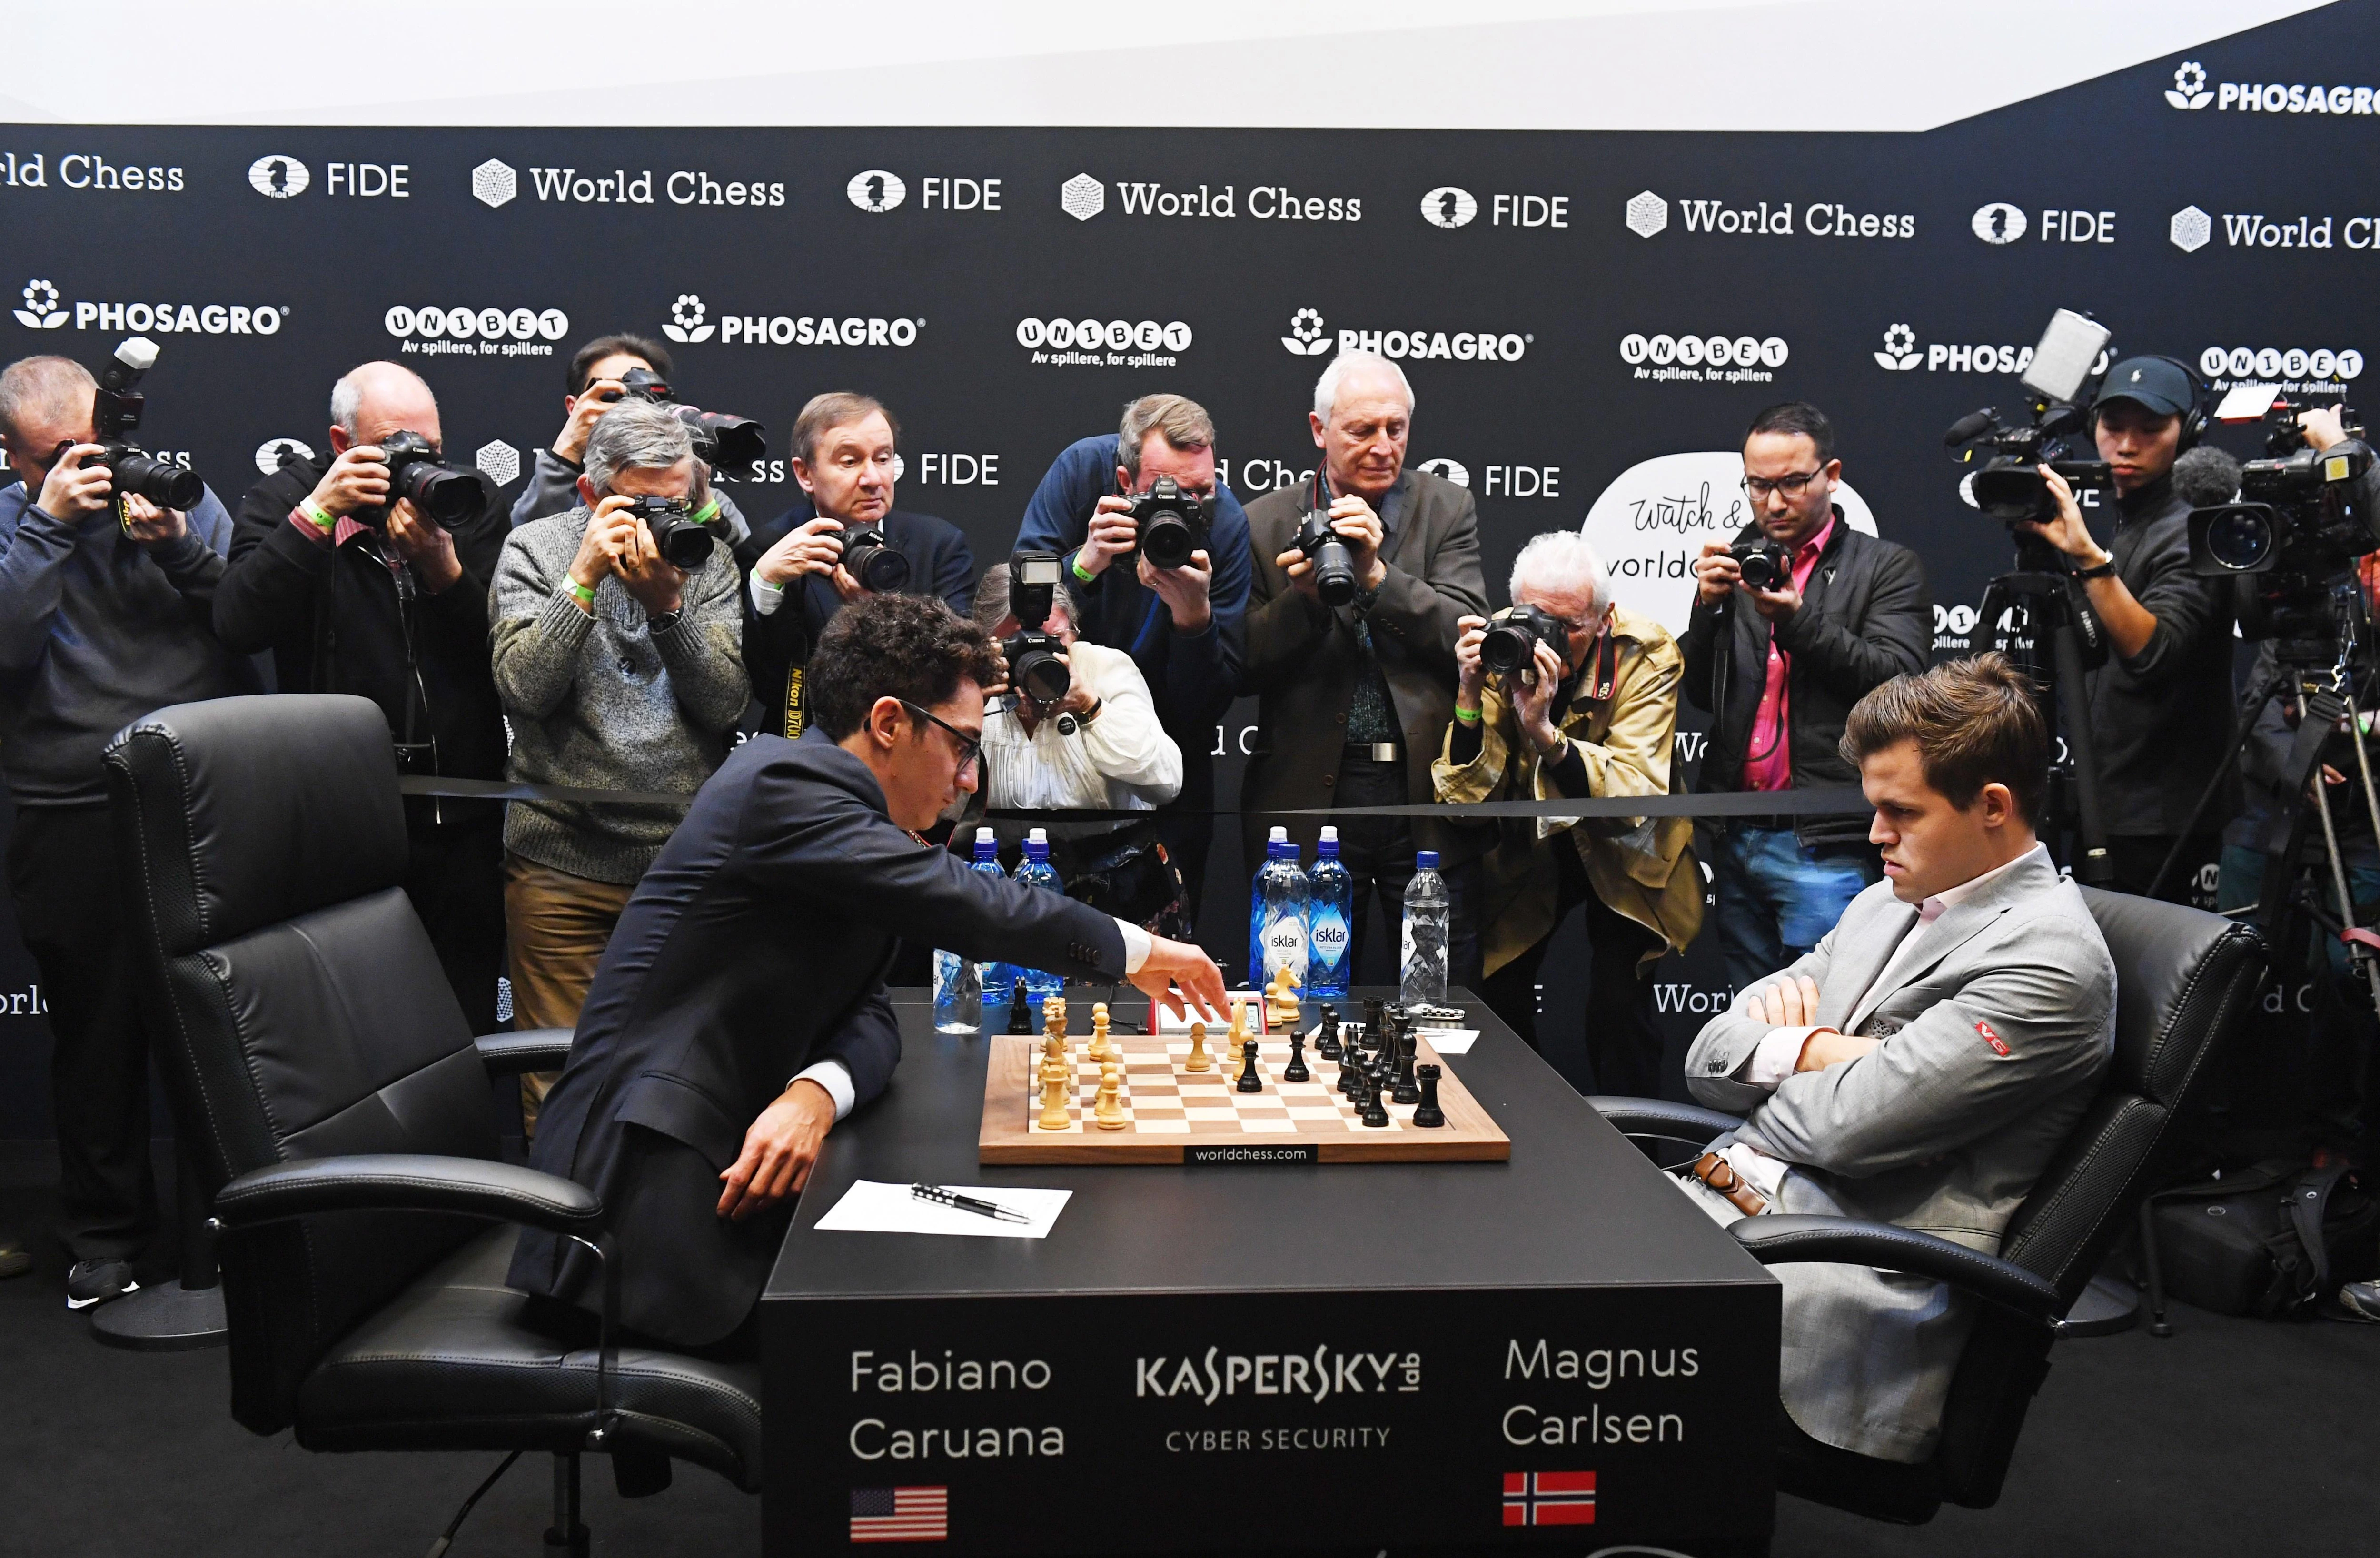 TORNEO DE CANDIDATOS EN MADRID (ajedrez): Nakamura sorprende con